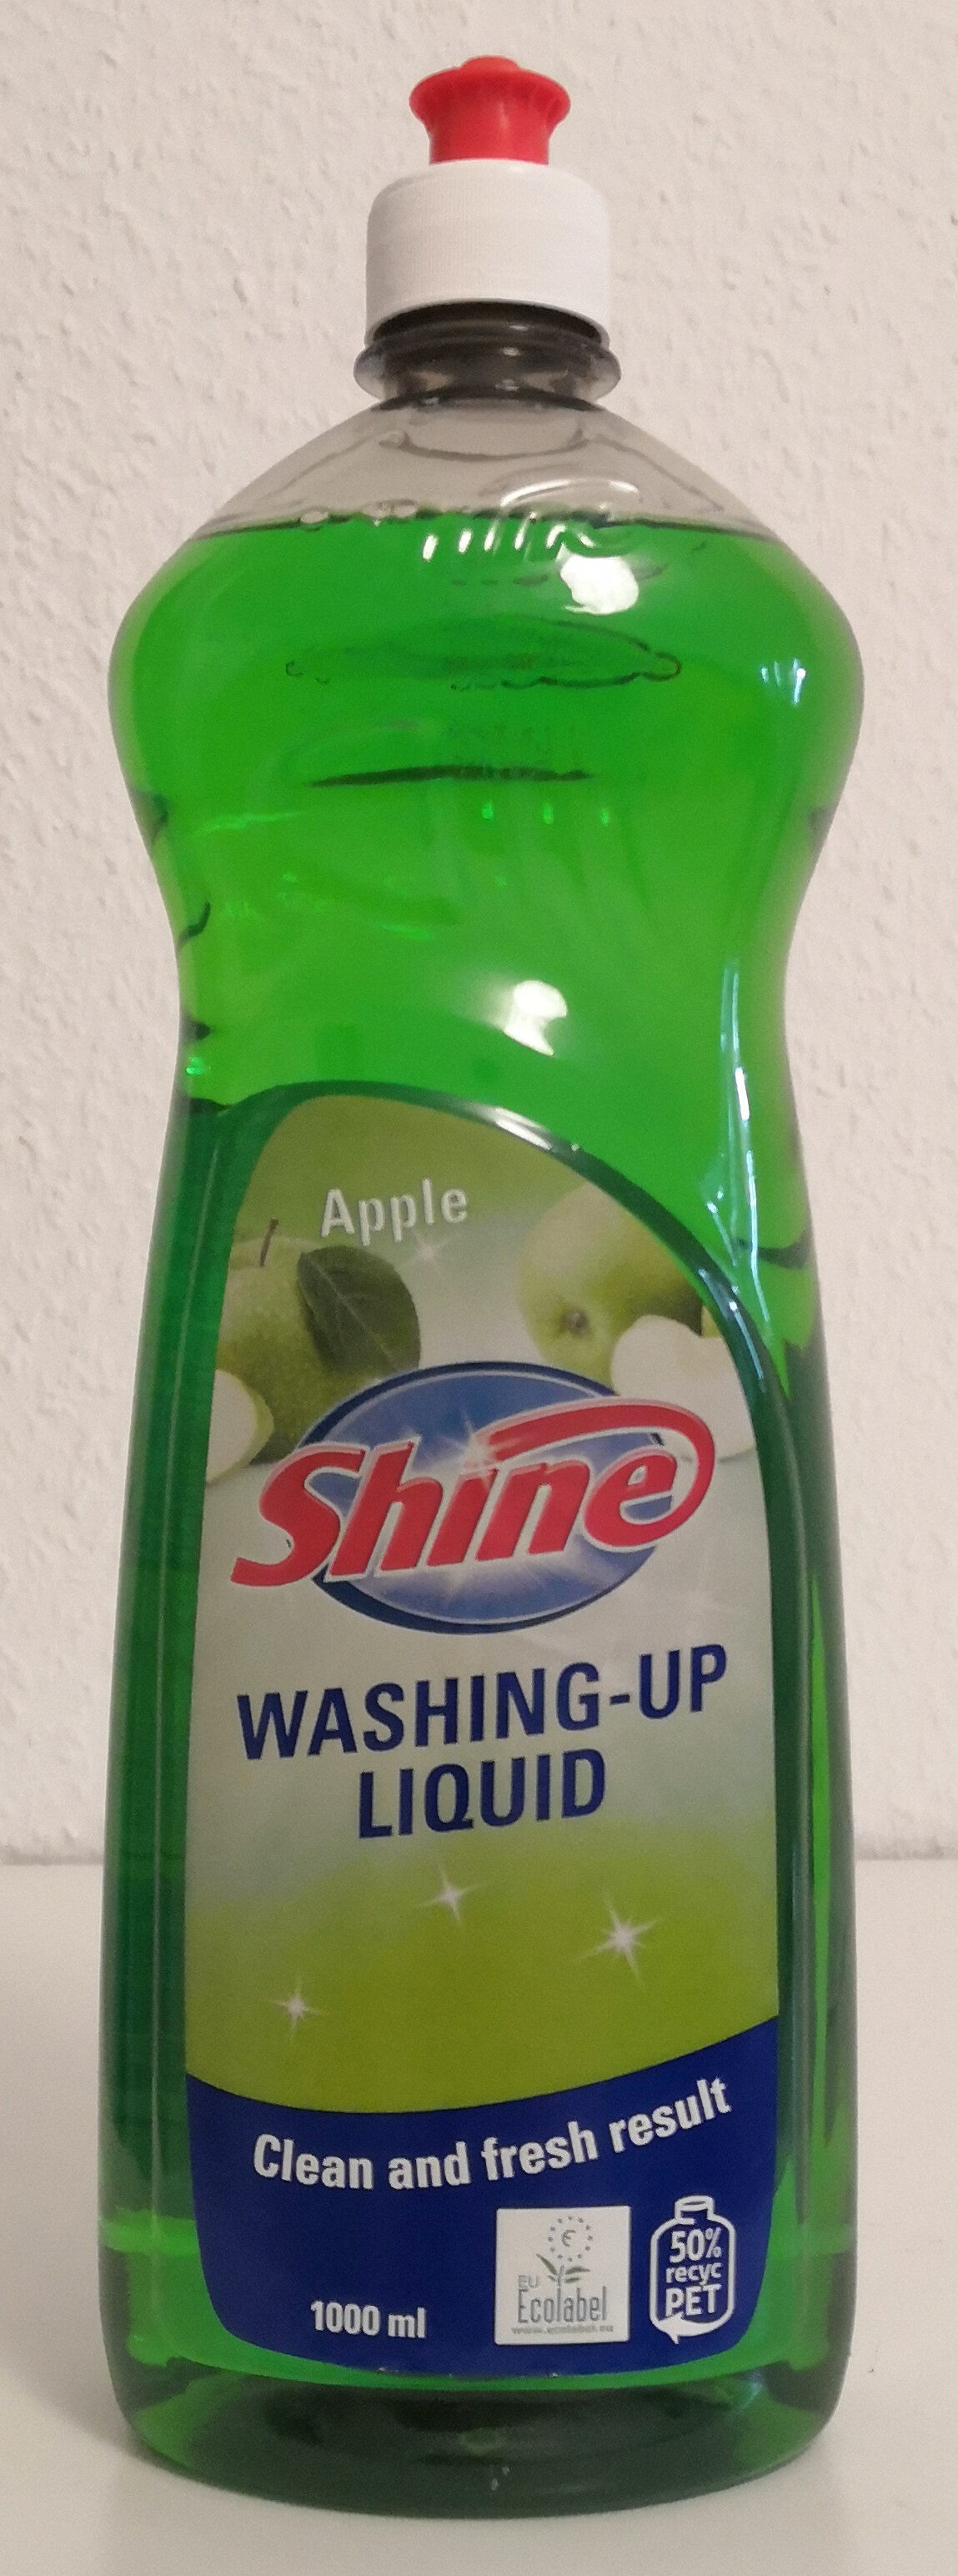 Washing-Up Liquid, Apple - Product - de